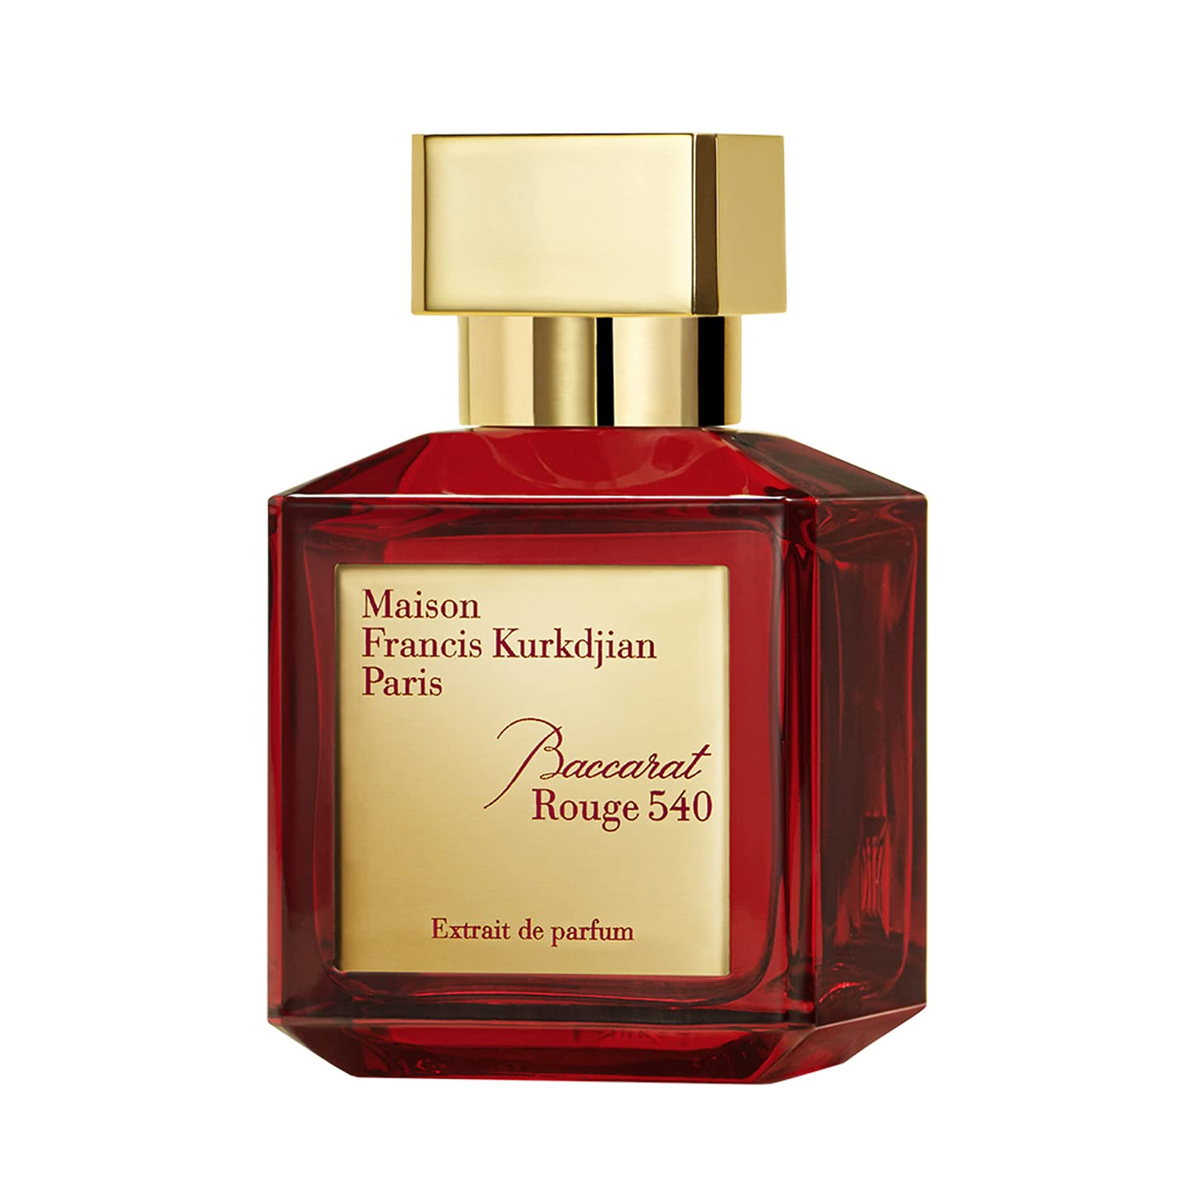 باکارات رژ 540 زنانه اکستریت د پرفیوم~Baccarat Rouge 540 Extrait De Parfum~MAISON FRANCIS KURKDIJAN PARIS